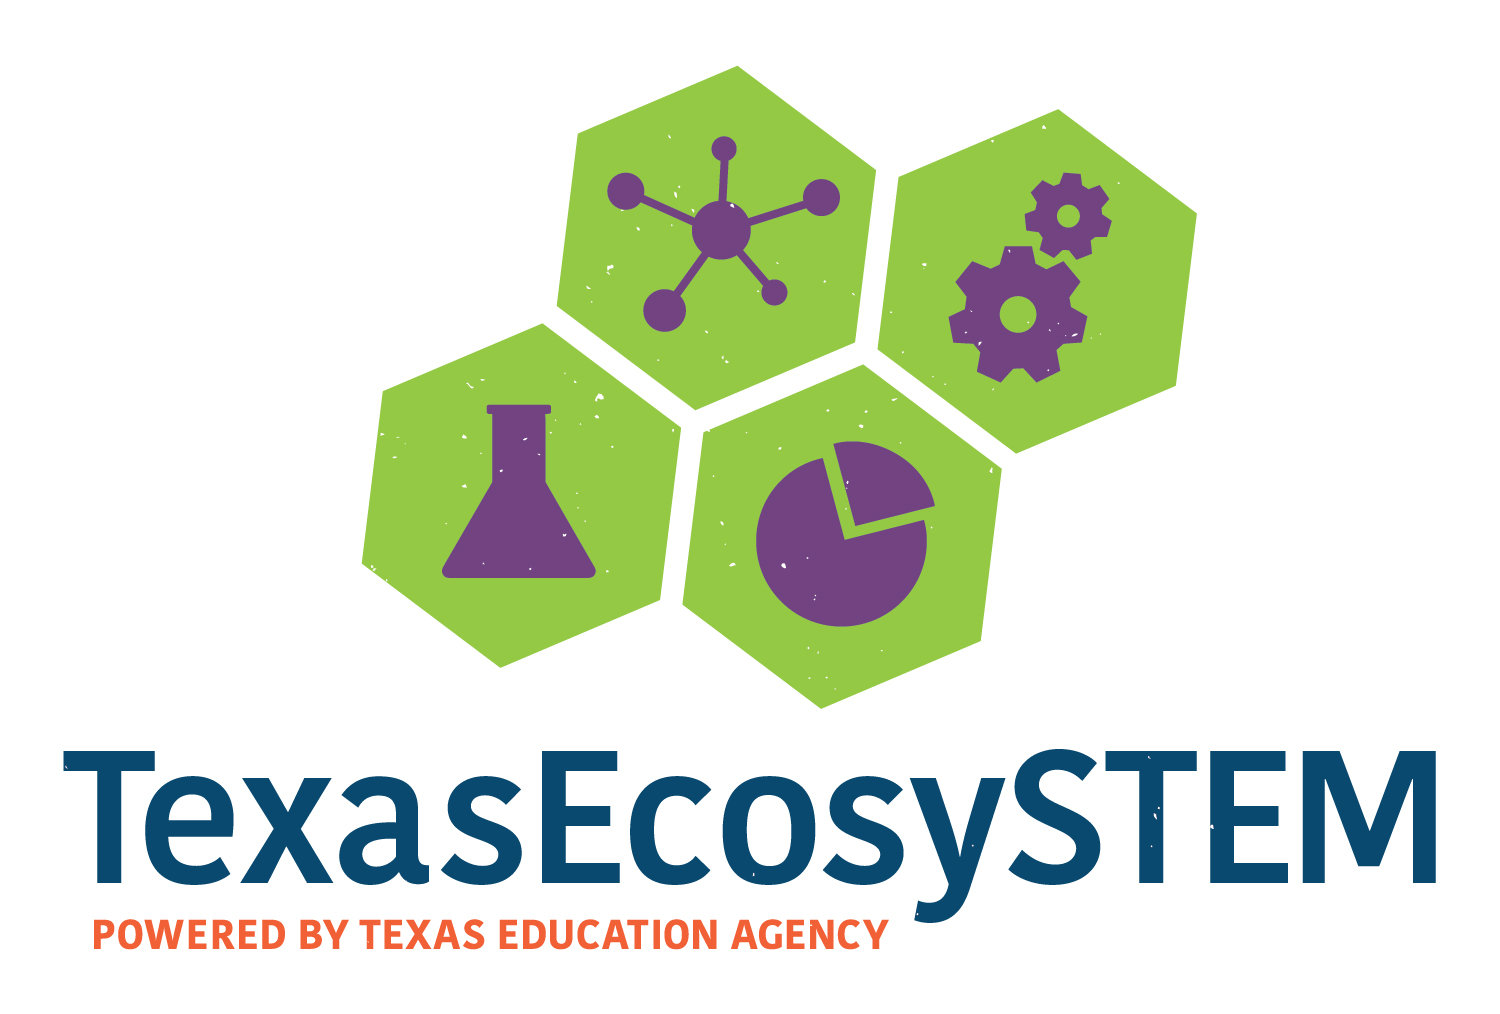 Texas Ecosystem Logo